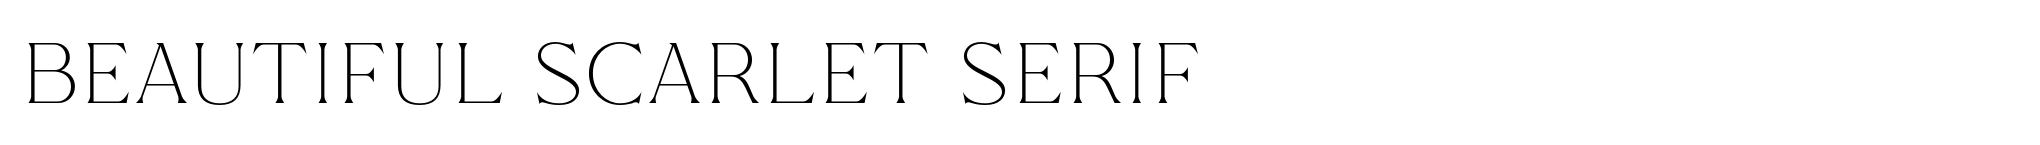 Beautiful Scarlet Serif image